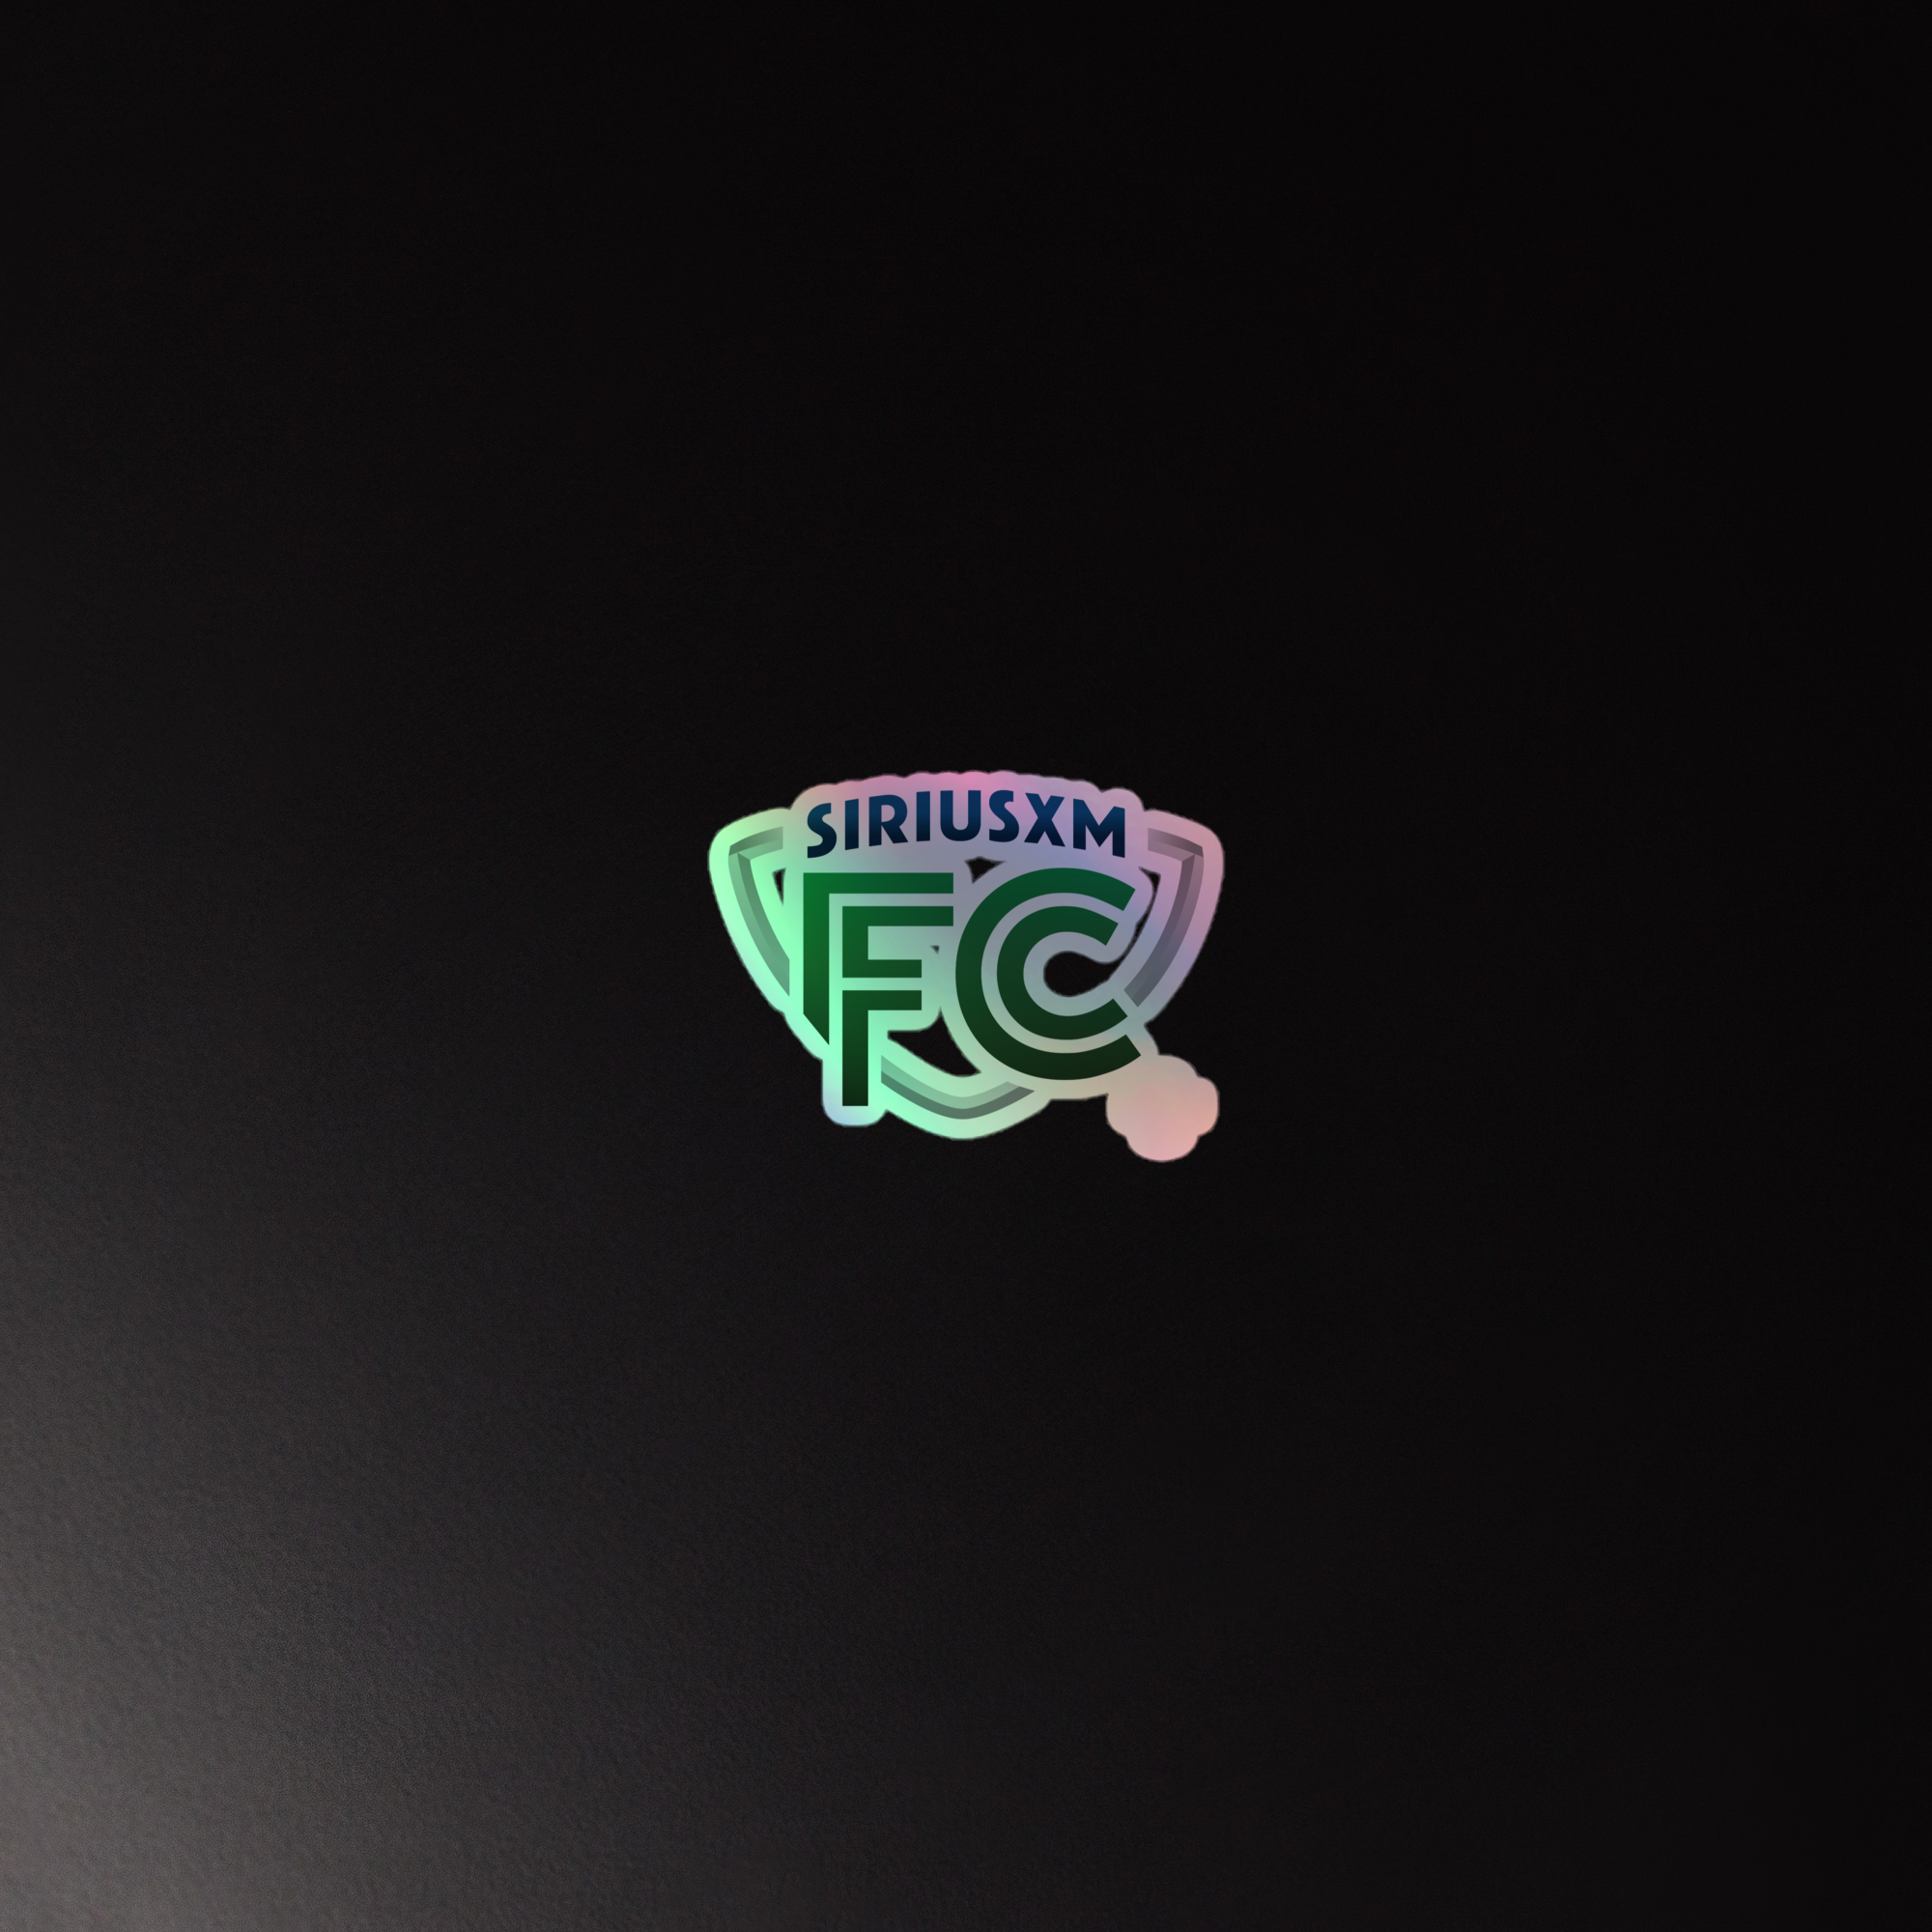 SiriusXM FC: Holographic Sticker